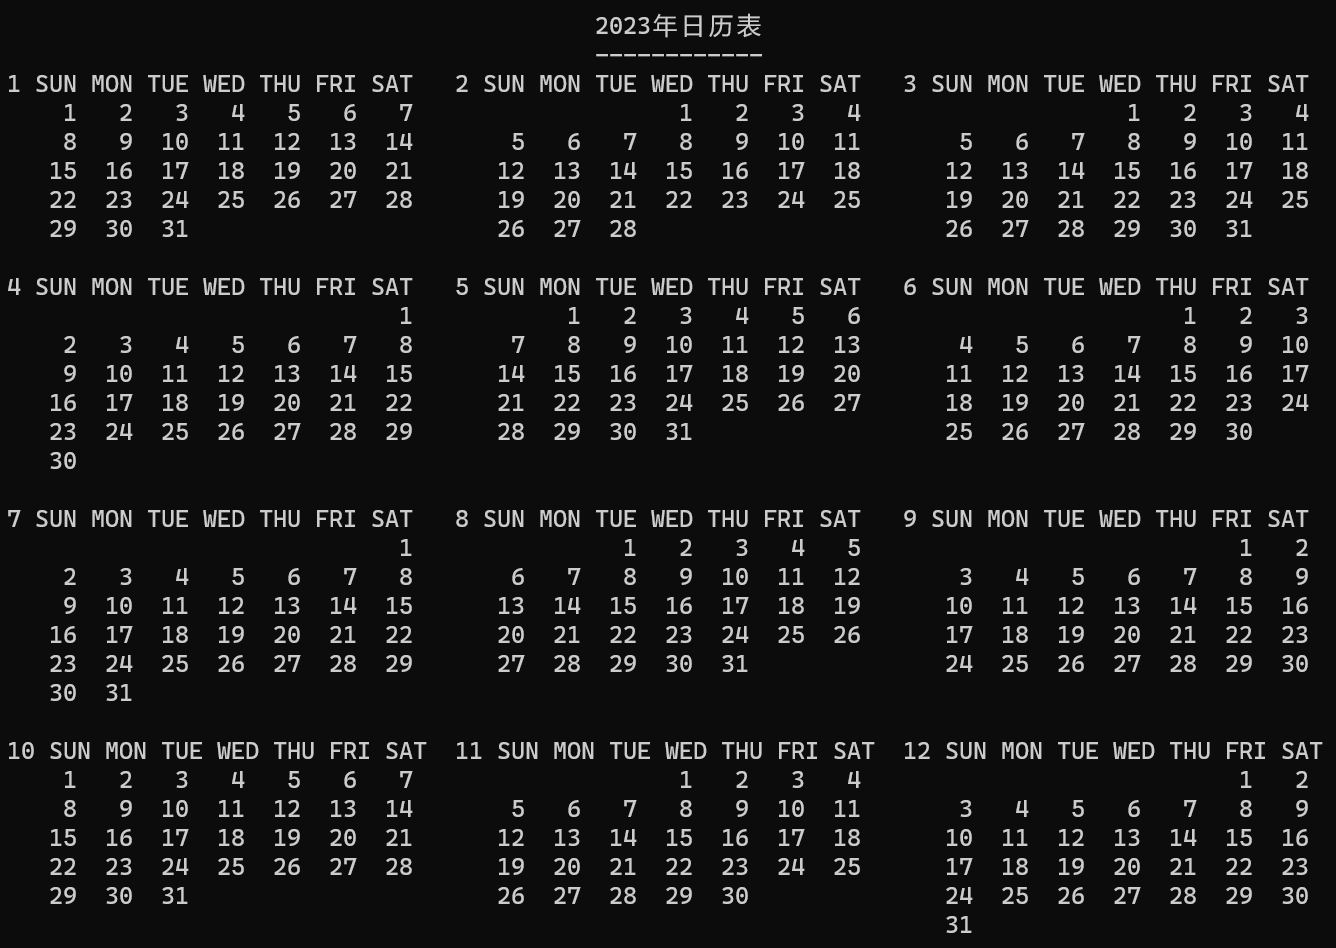 GitHub handsometaoa/chinese_lunar_calendar C++ 实现的日历，实现了查询年日历、月日历，公历